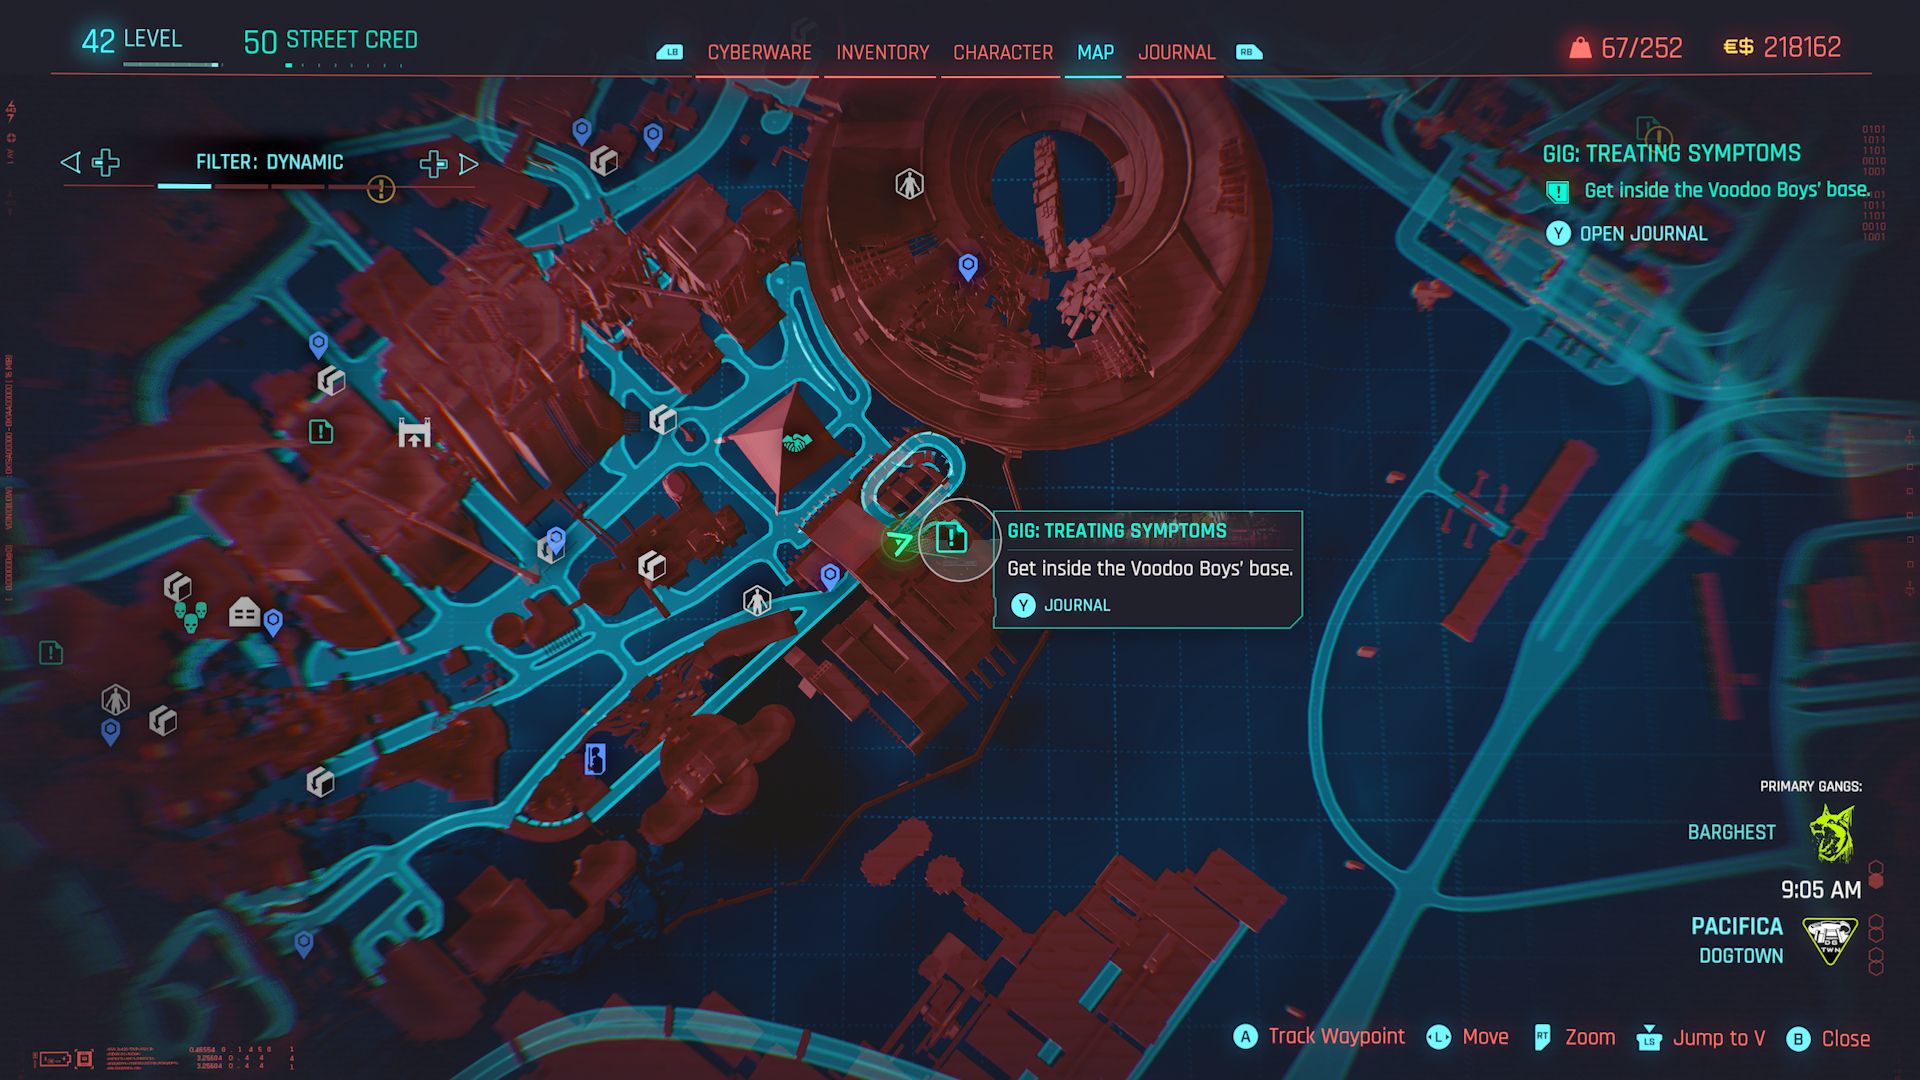 Cyberpunk 2077 Phantom Liberty Screenshot Of Treating Symptoms Start Point On Map Location